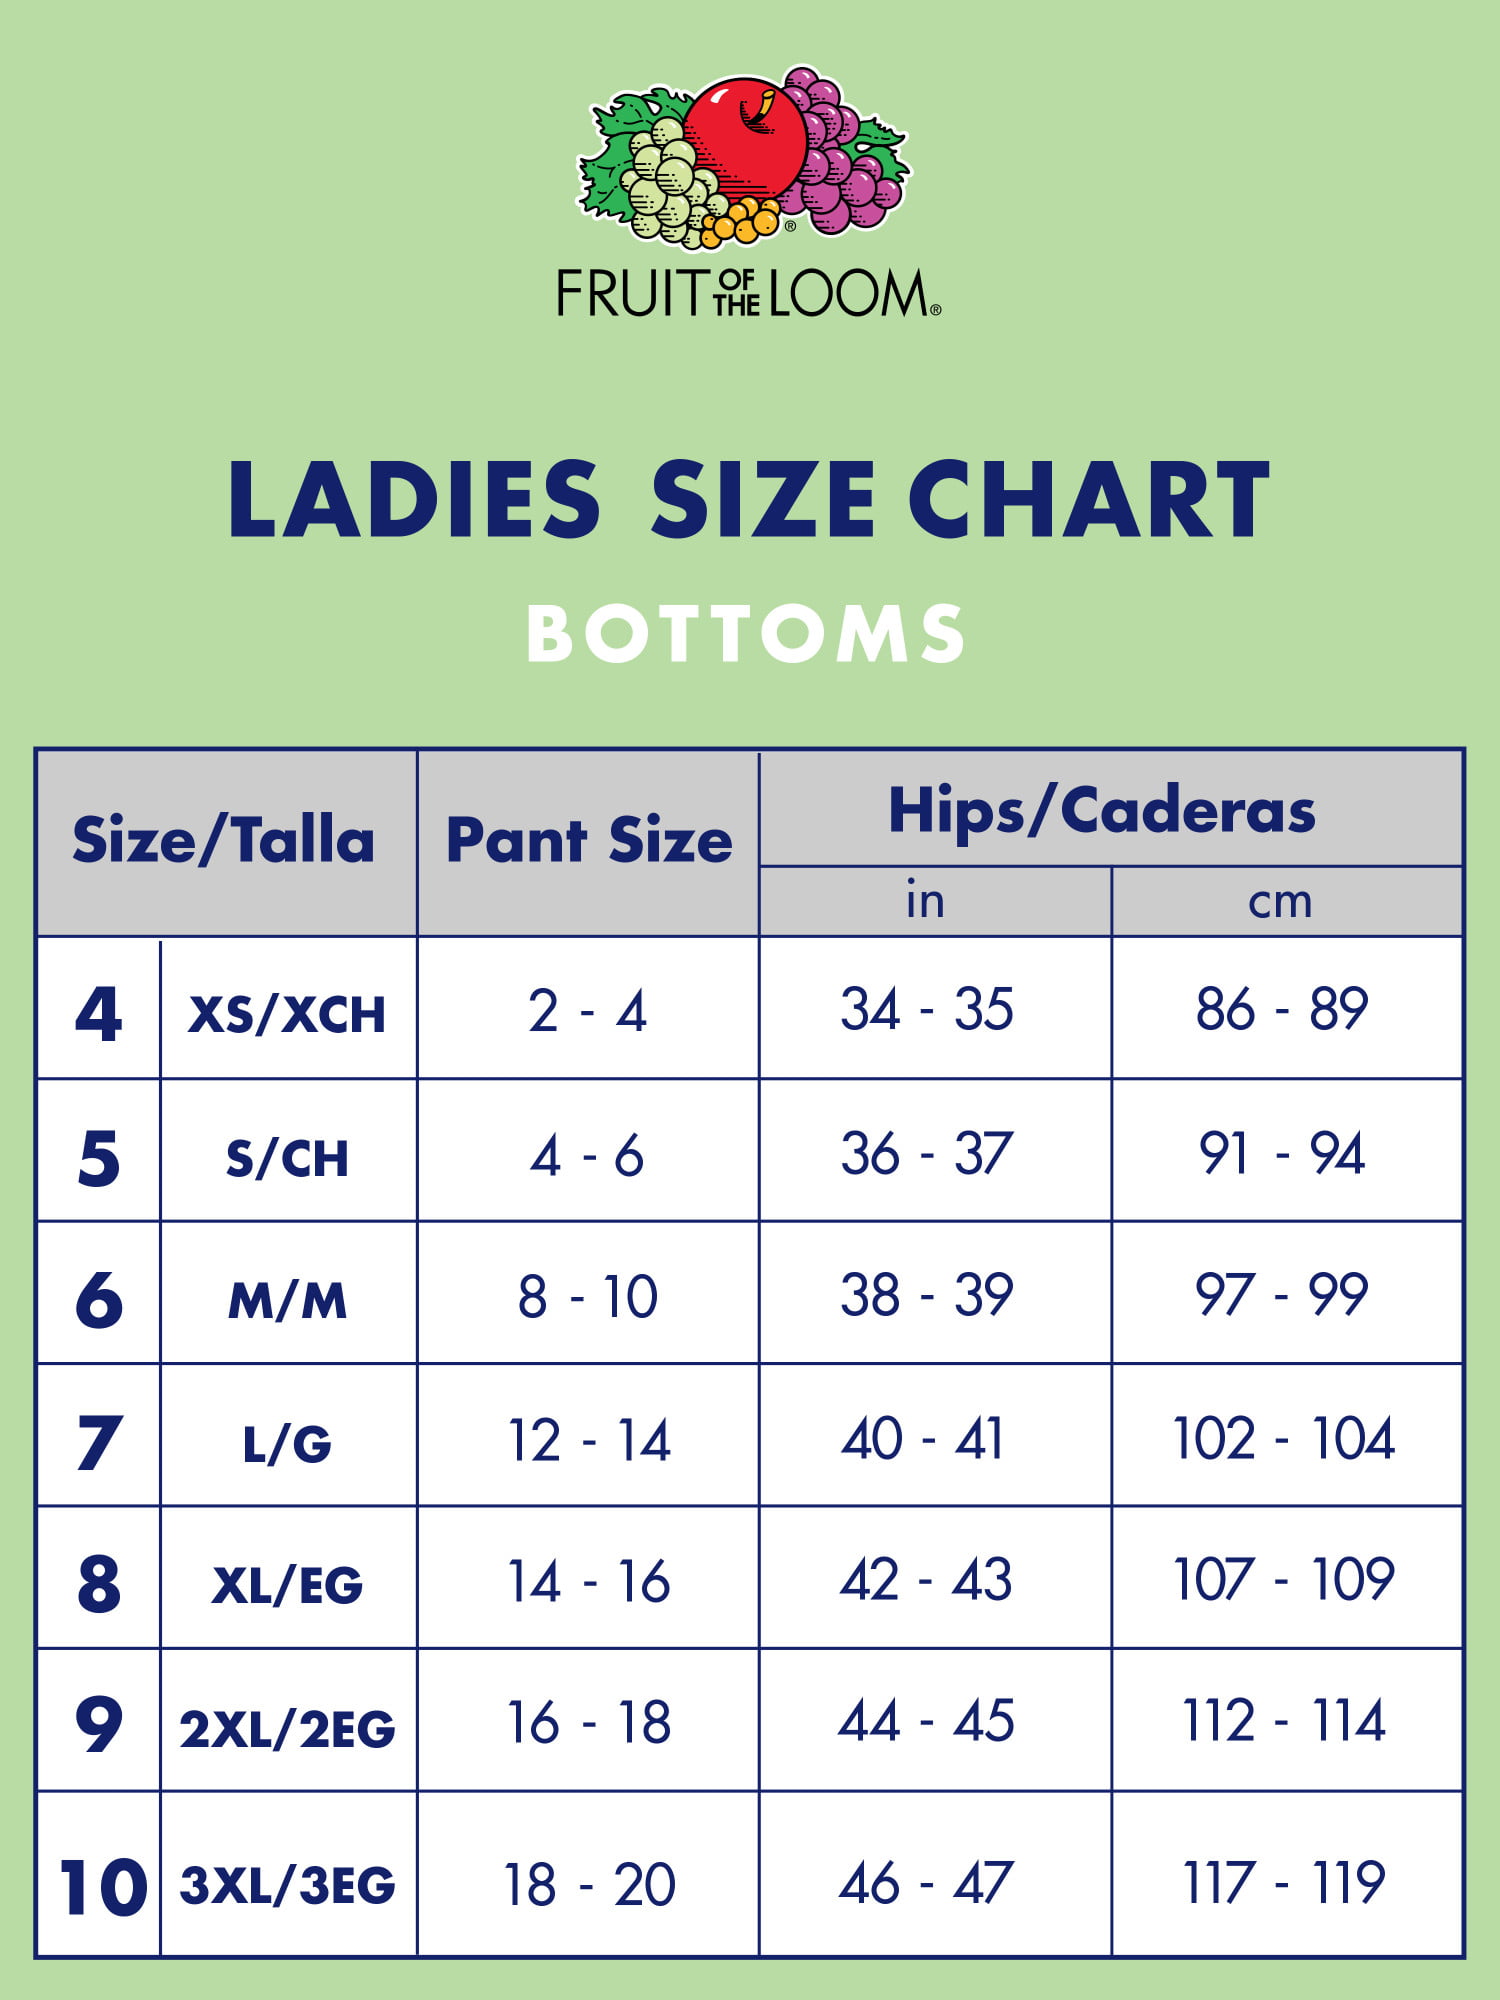 Fruit of the Loom Women's Nylon Brief Underwear, 6 Pack, Sizes 6-10